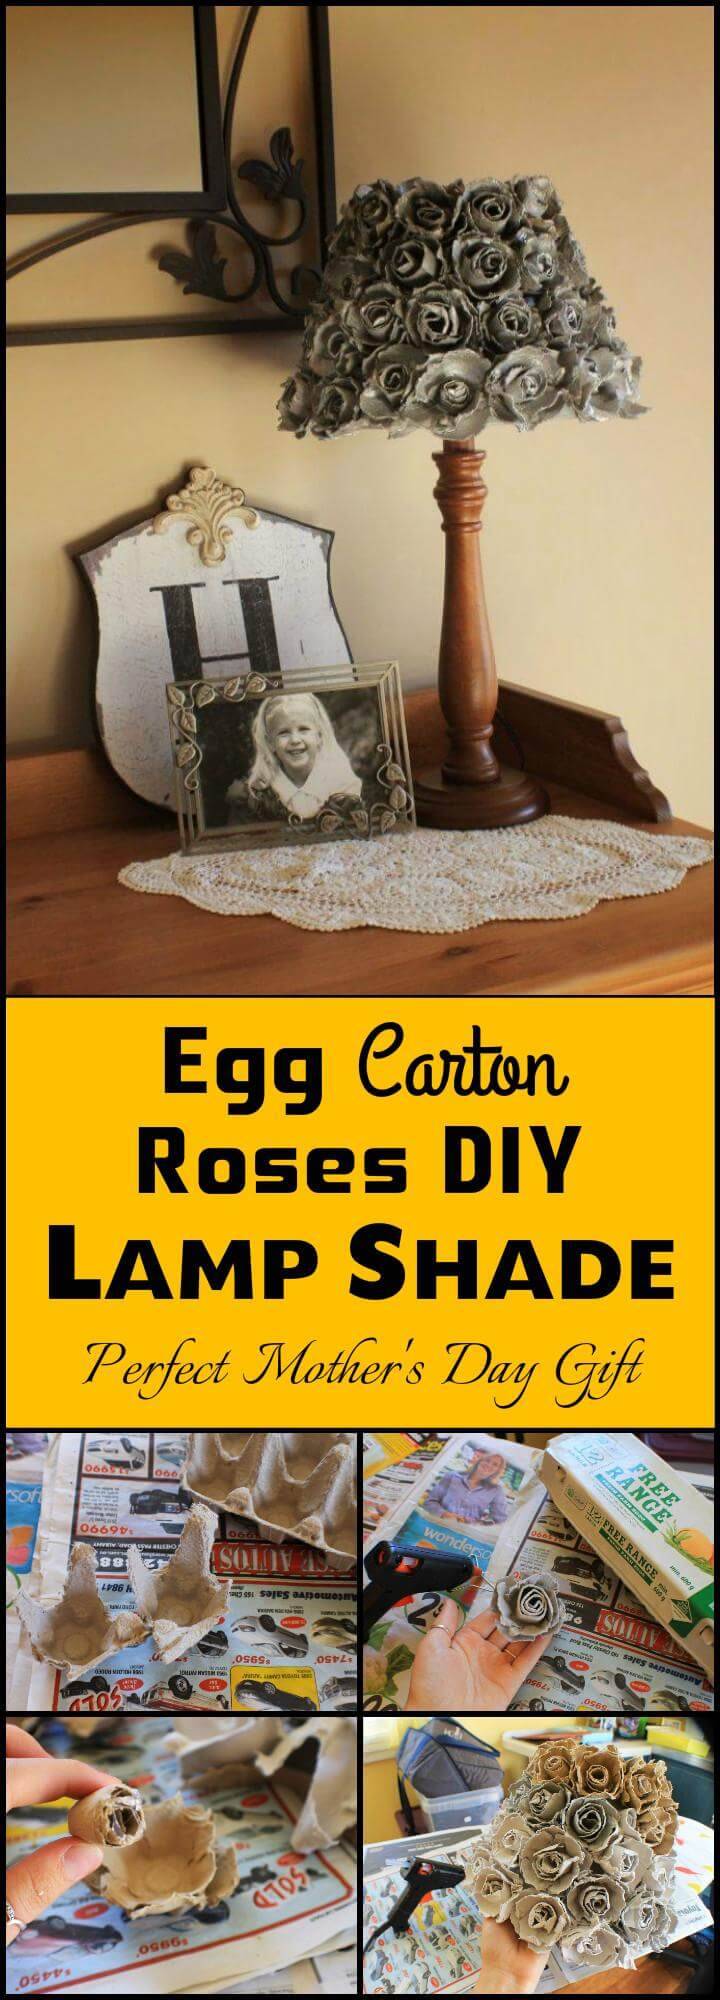 egg carton roses DIY lamp shade Mother's Day gift idea